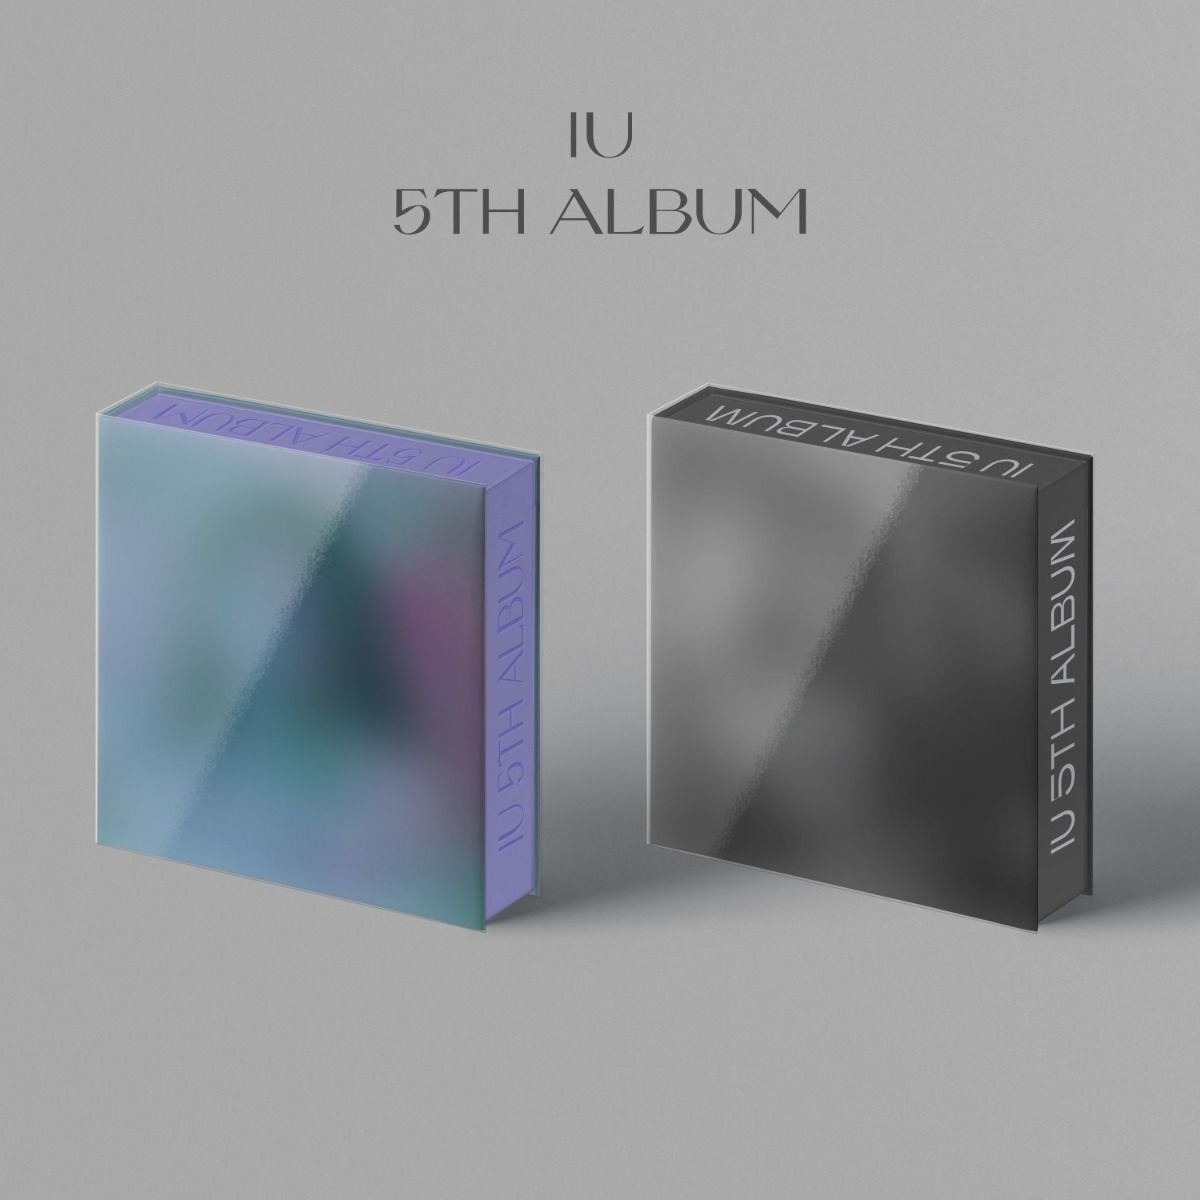 IU 5TH ALBUM 예약판매 안내